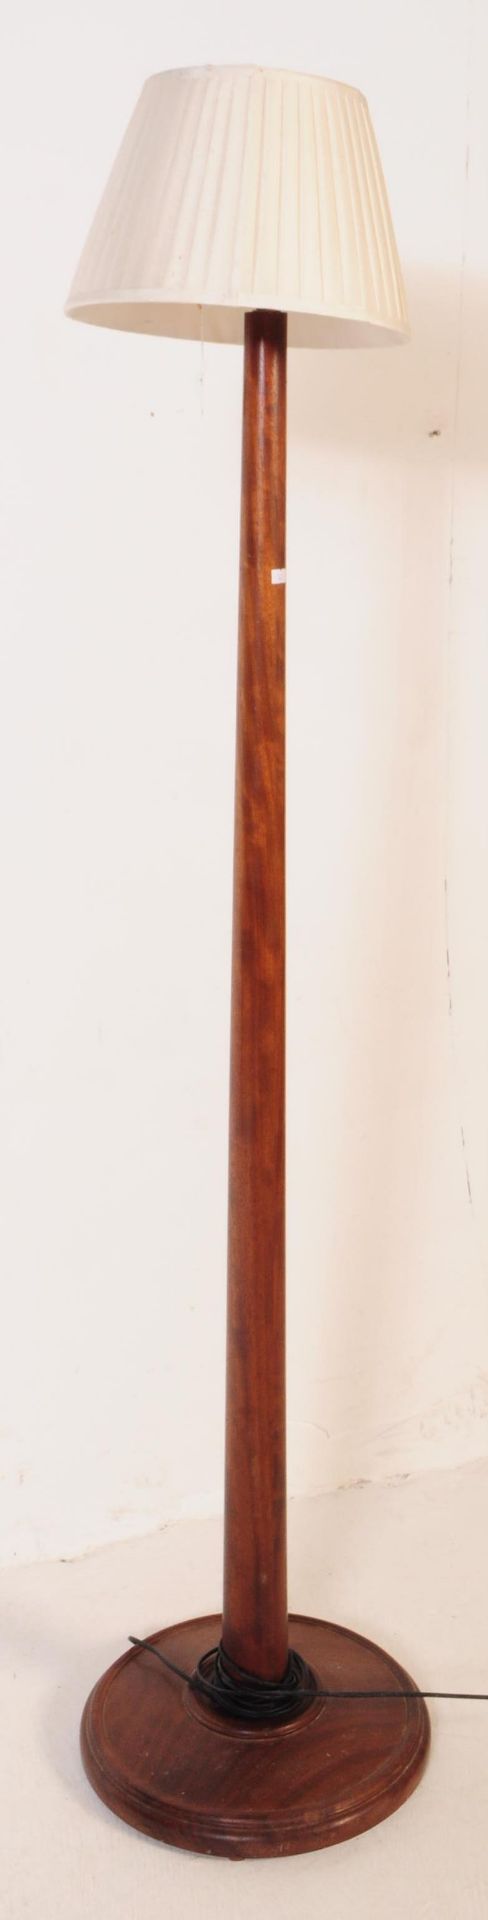 19TH CENTURY VICTORIAN MAHOGANY STANDARD LAMP - Image 3 of 6